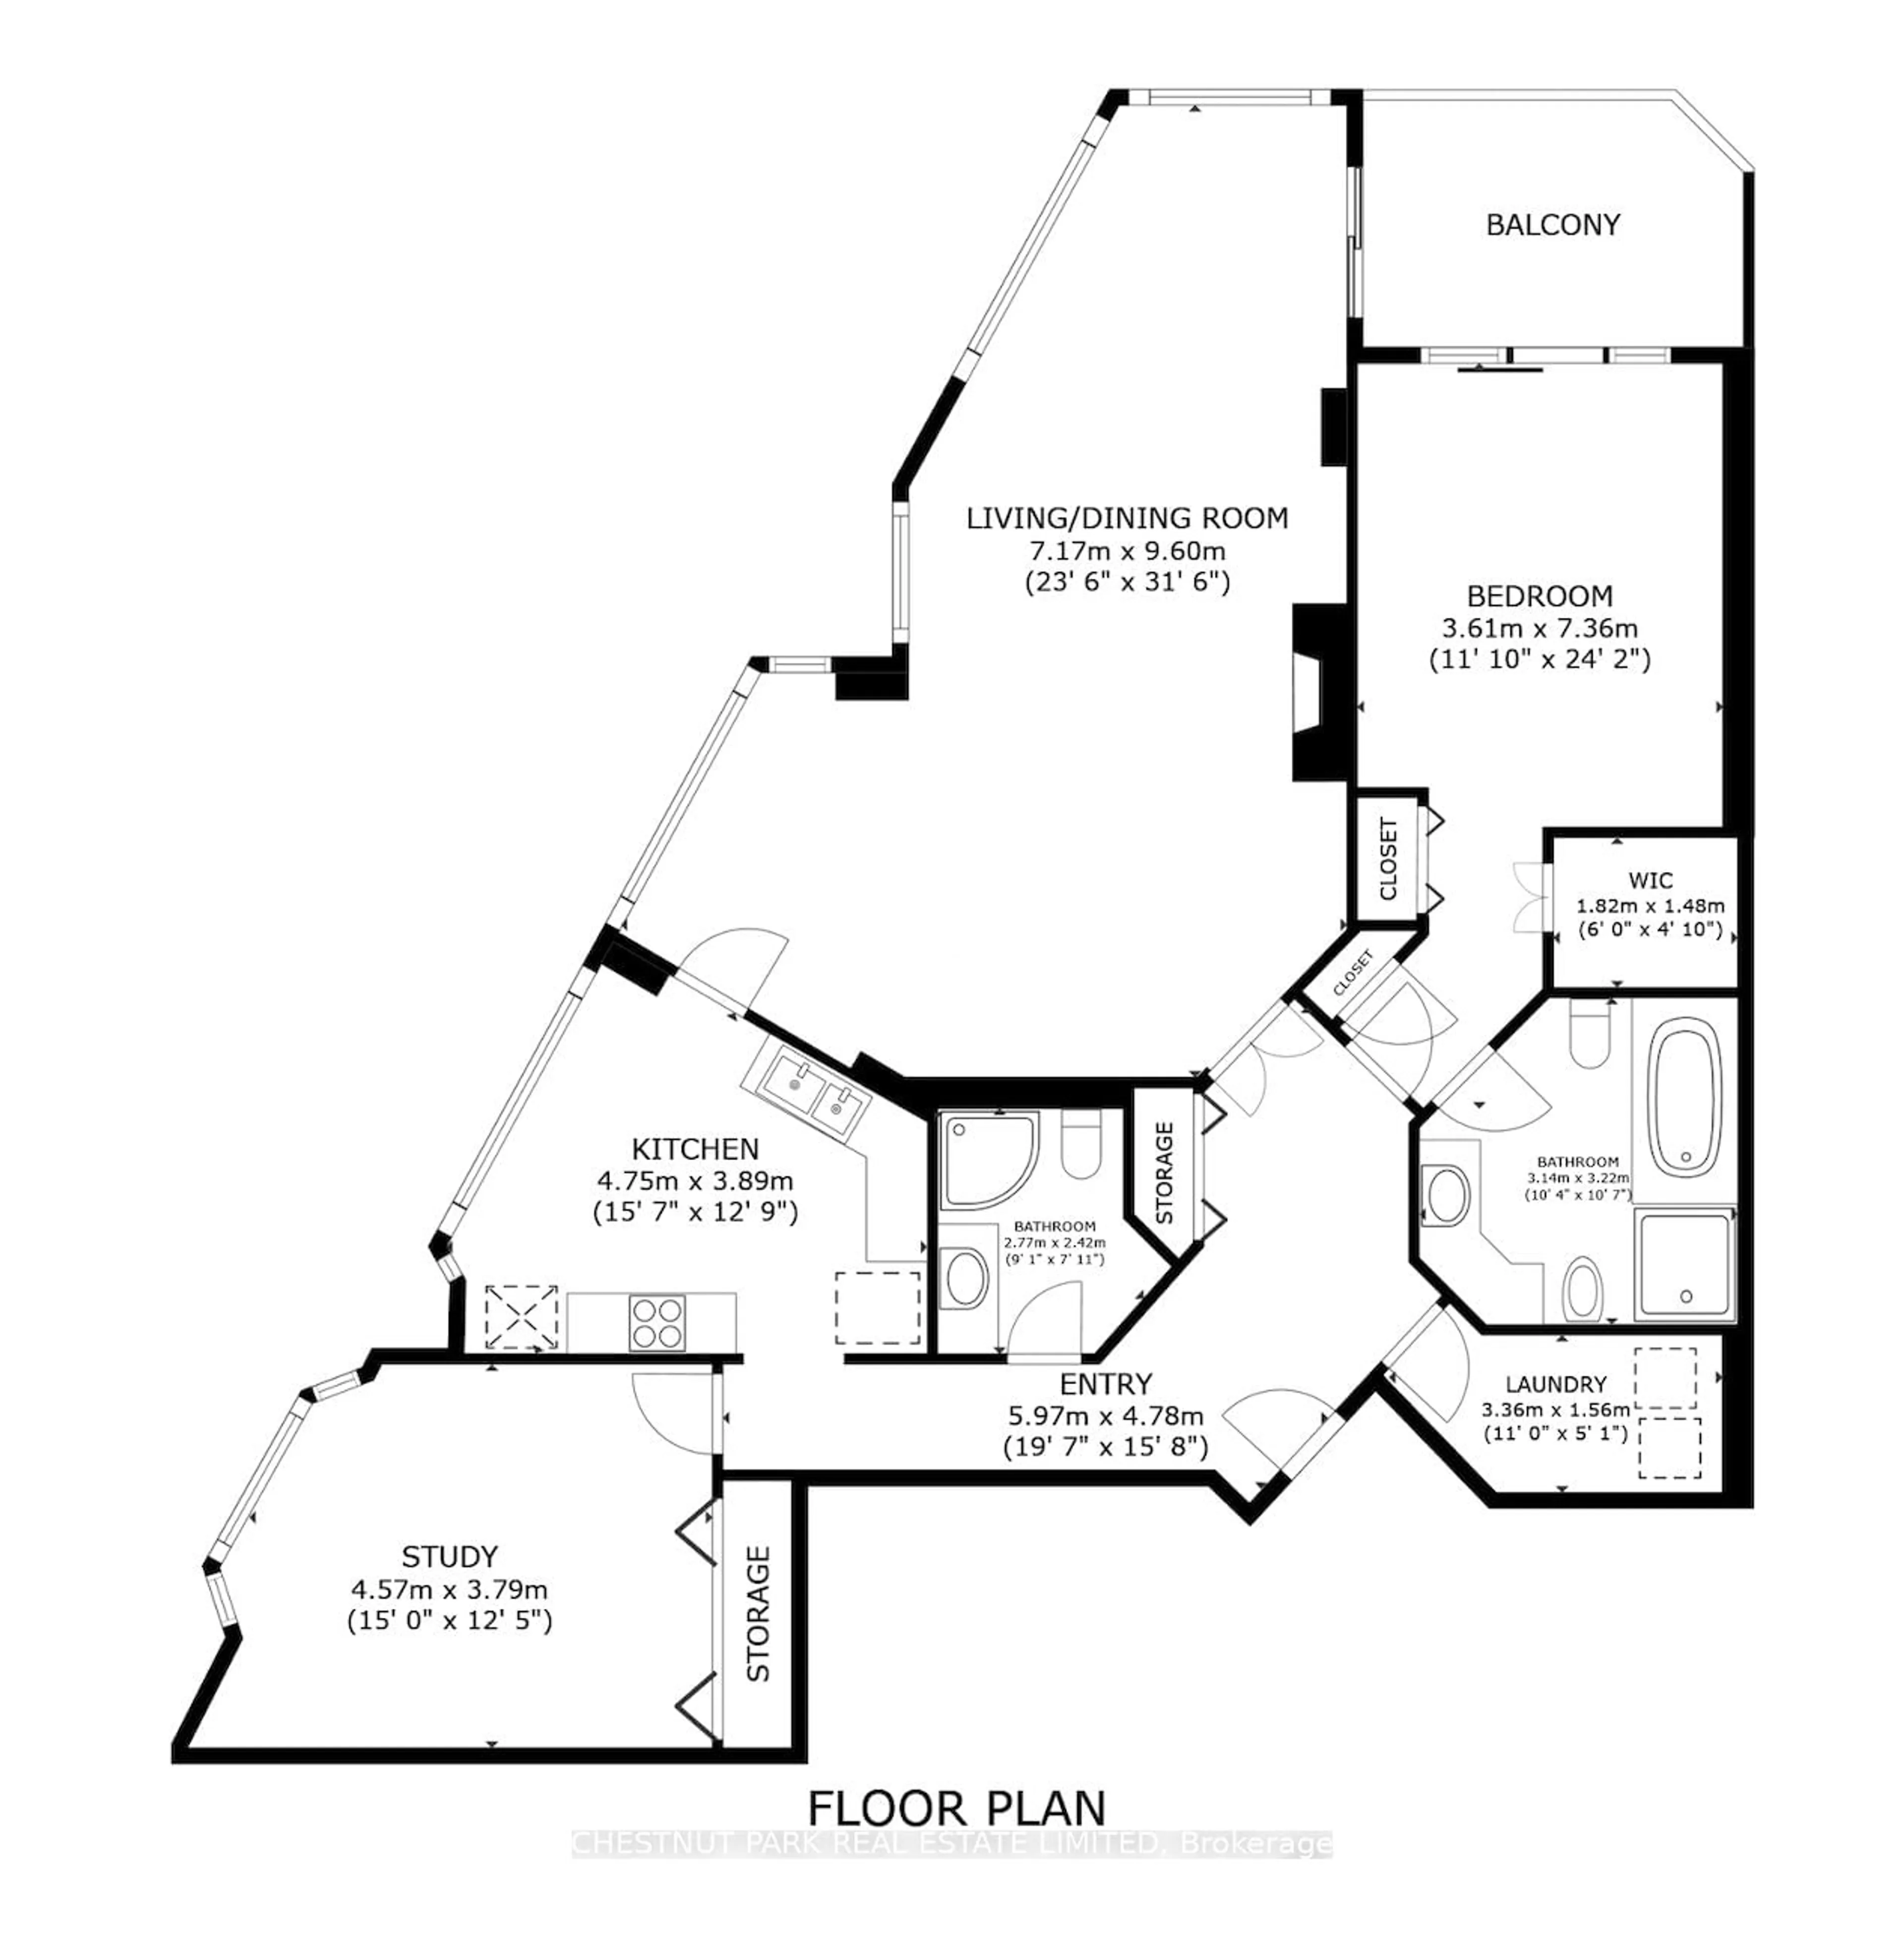 Floor plan for 3800 Yonge St #505, Toronto Ontario M4N 3P7